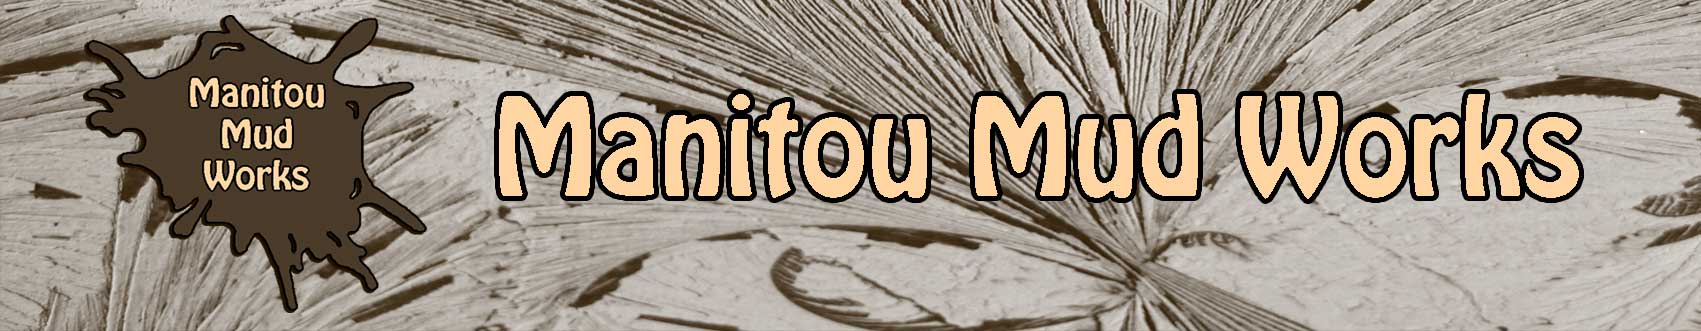 Manitou Mud Works Logo and Header